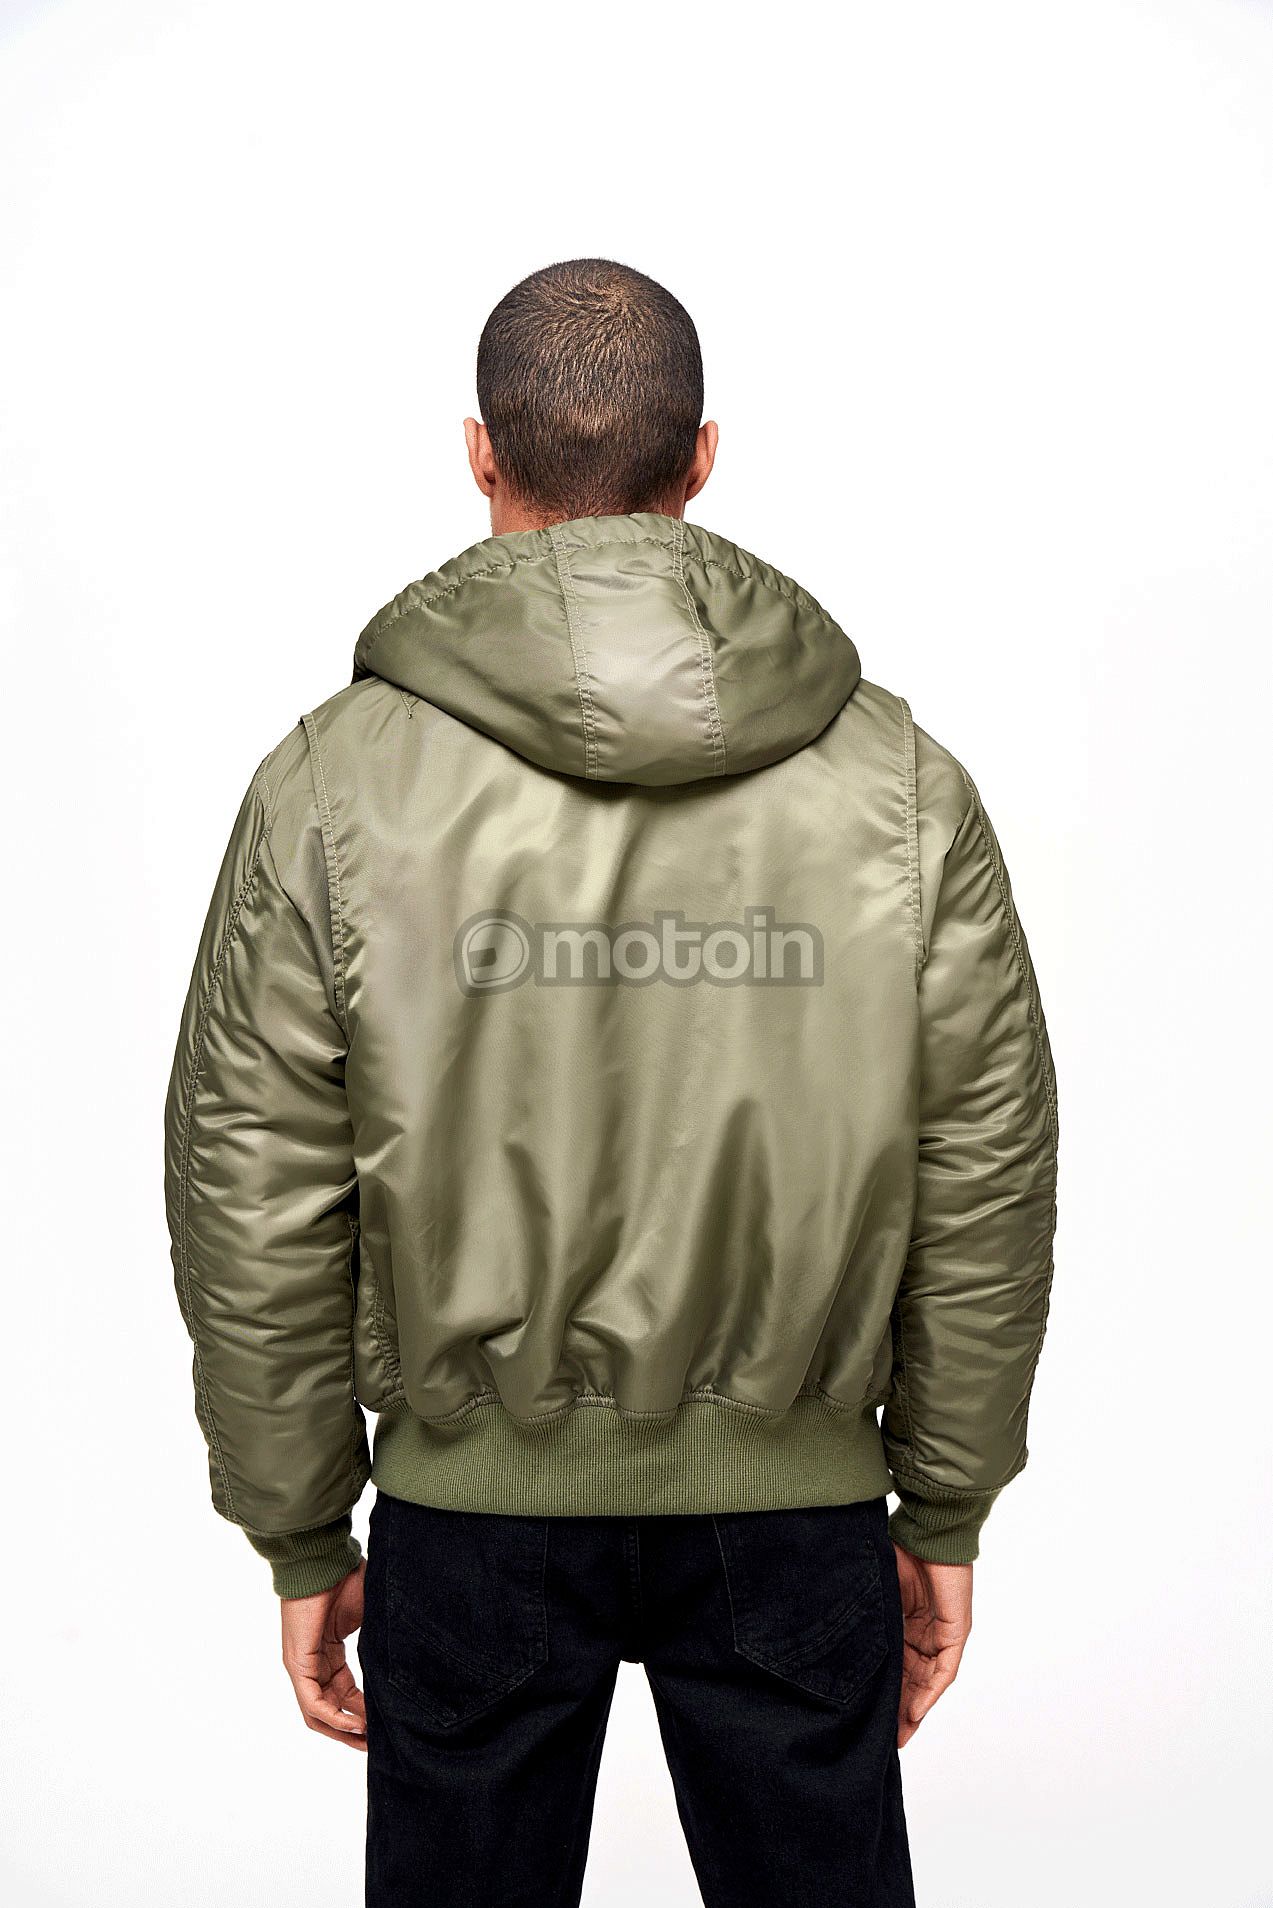 Hooded, Brandit textile CWU jacket